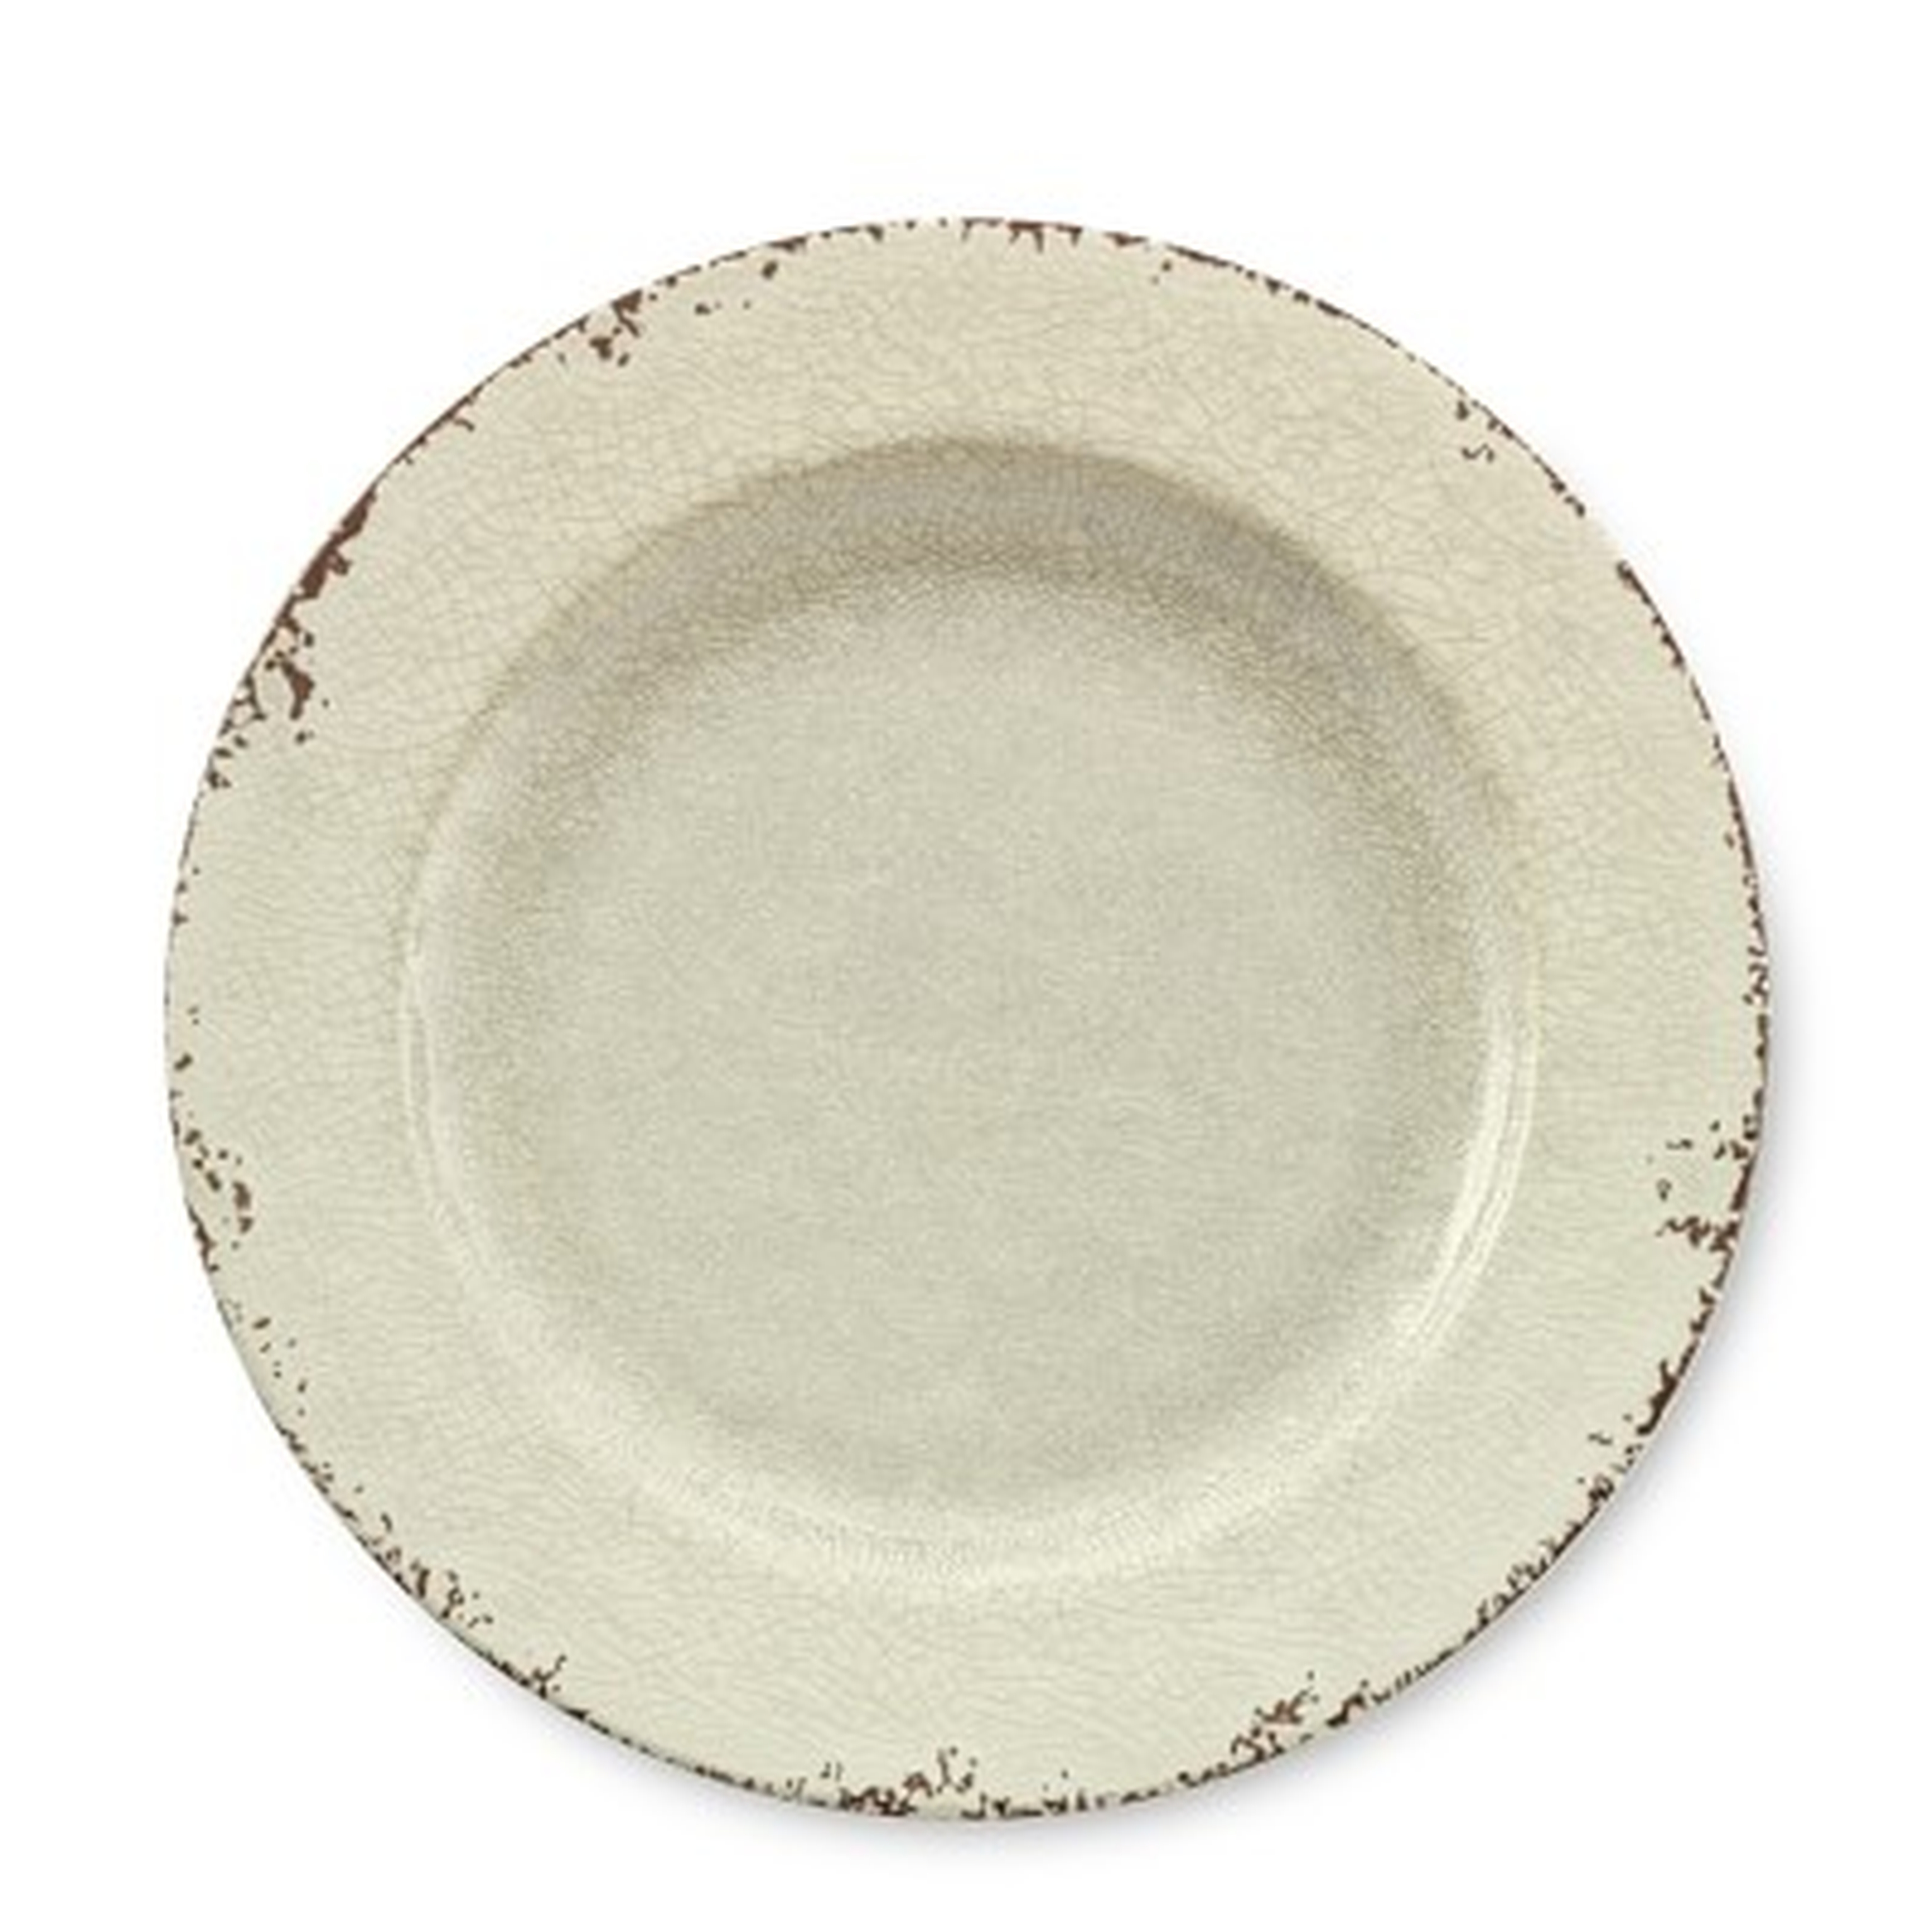 Rustic(R) Outdoor Melamine Dinner Plates, Set of 4, Ivory - Williams Sonoma